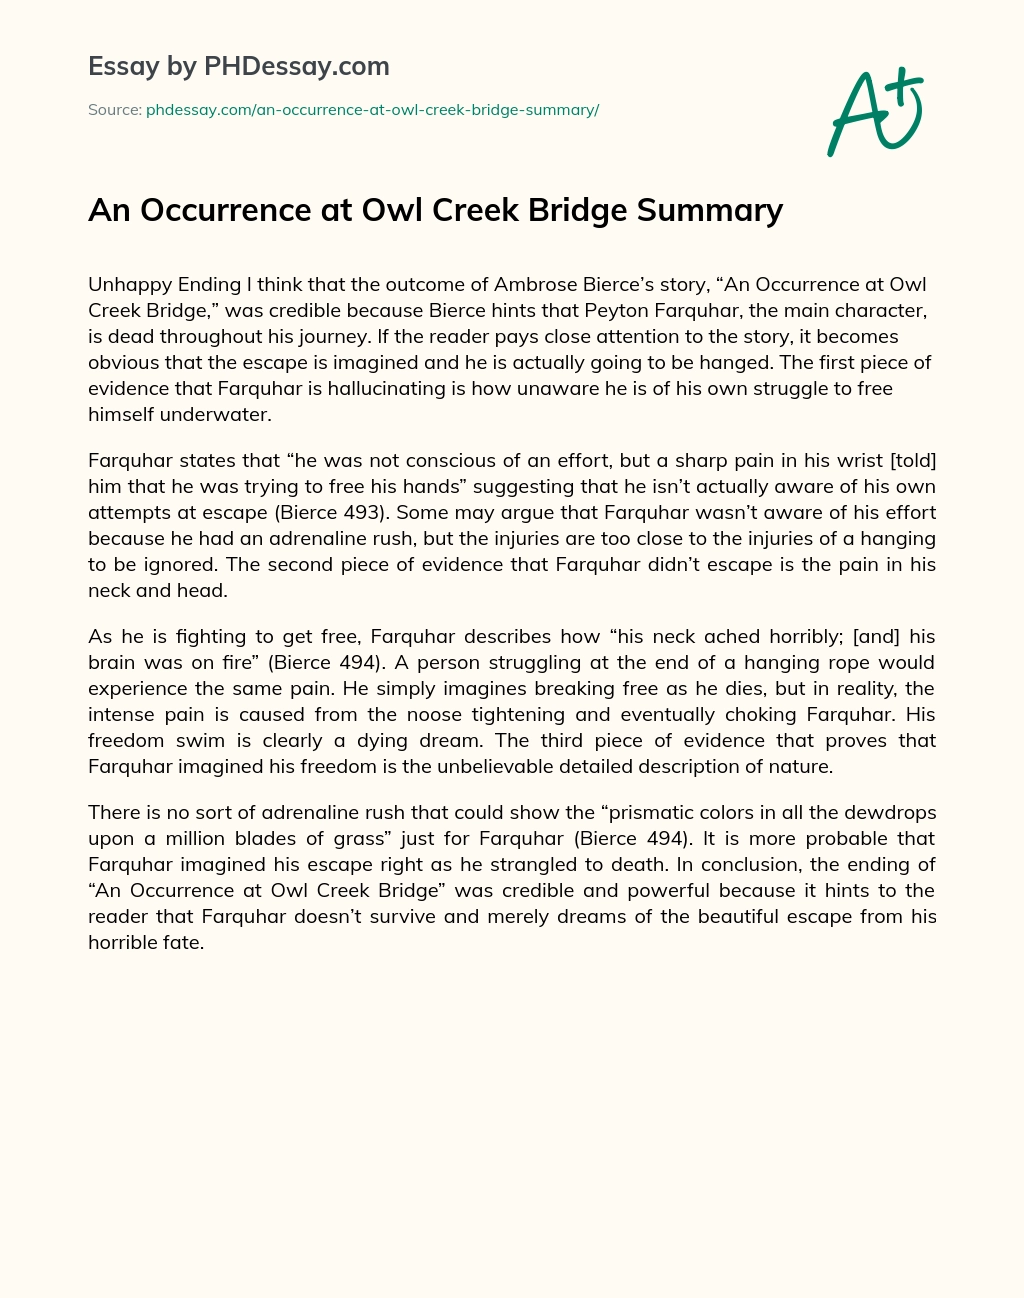 An Occurrence at Owl Creek Bridge Summary essay